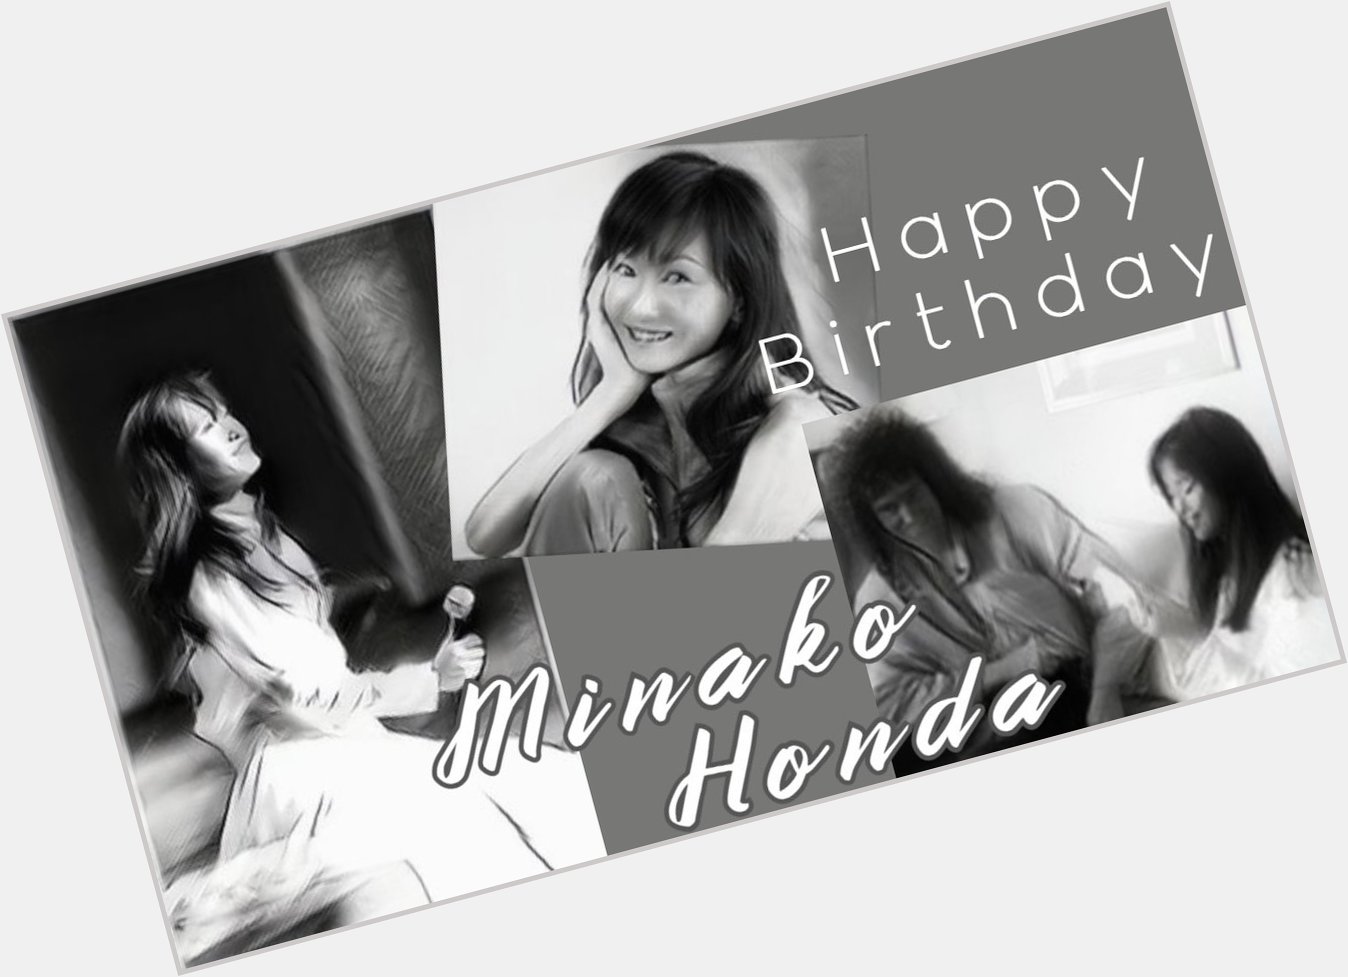 Happy Birthday  Minako Honda
1967 7 31    - 2005 11 6  